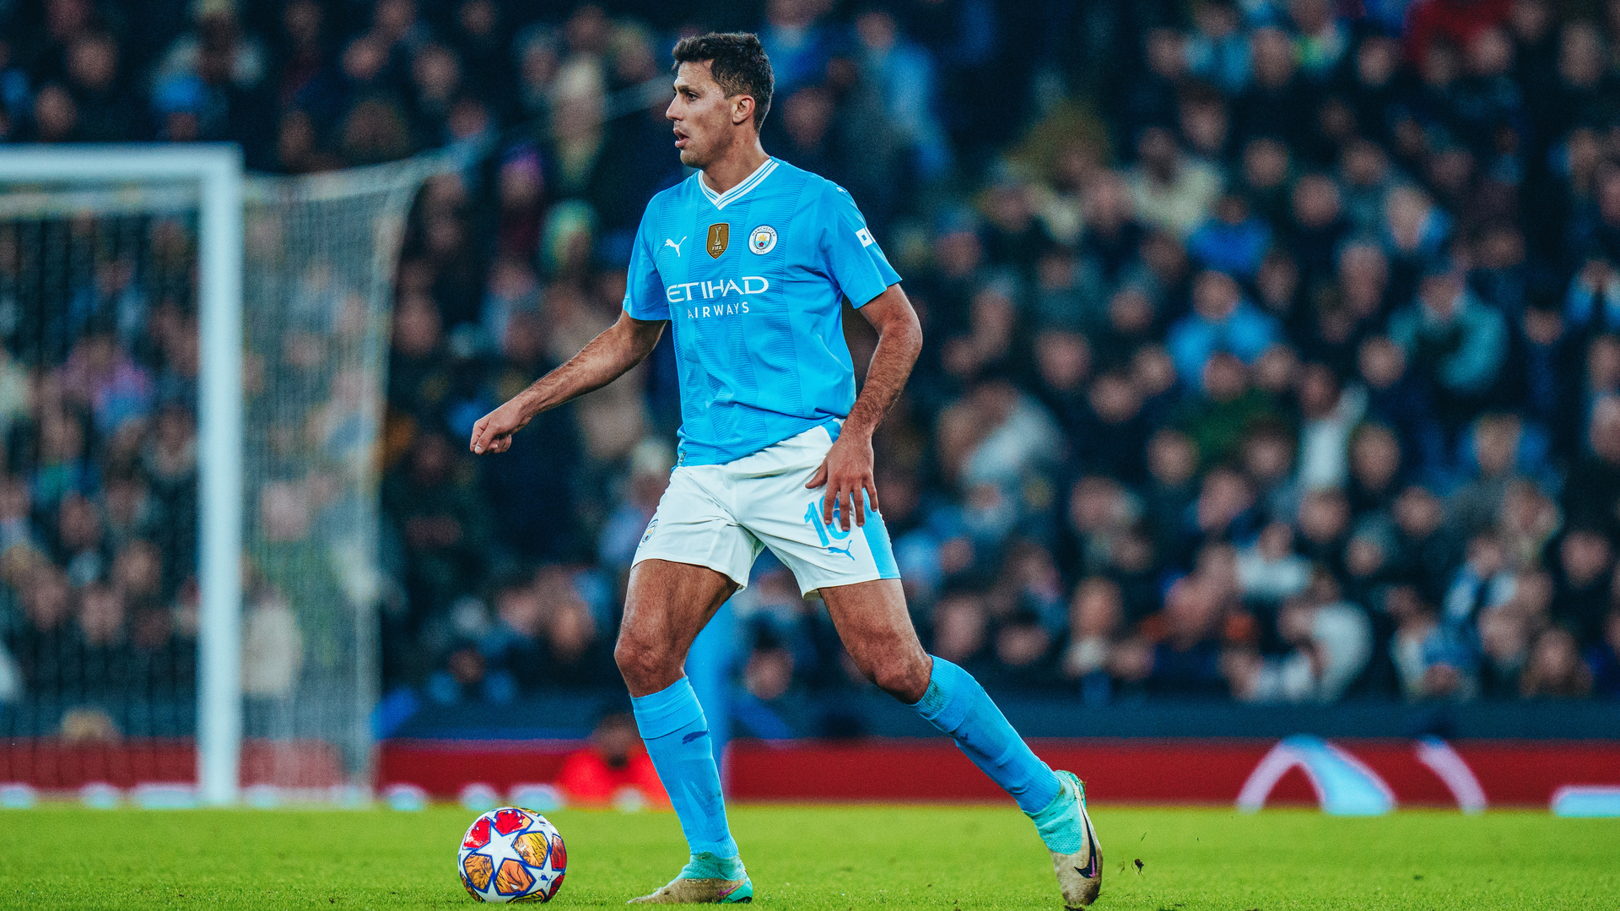 Rodrigo’s incredible Champions League stats this season